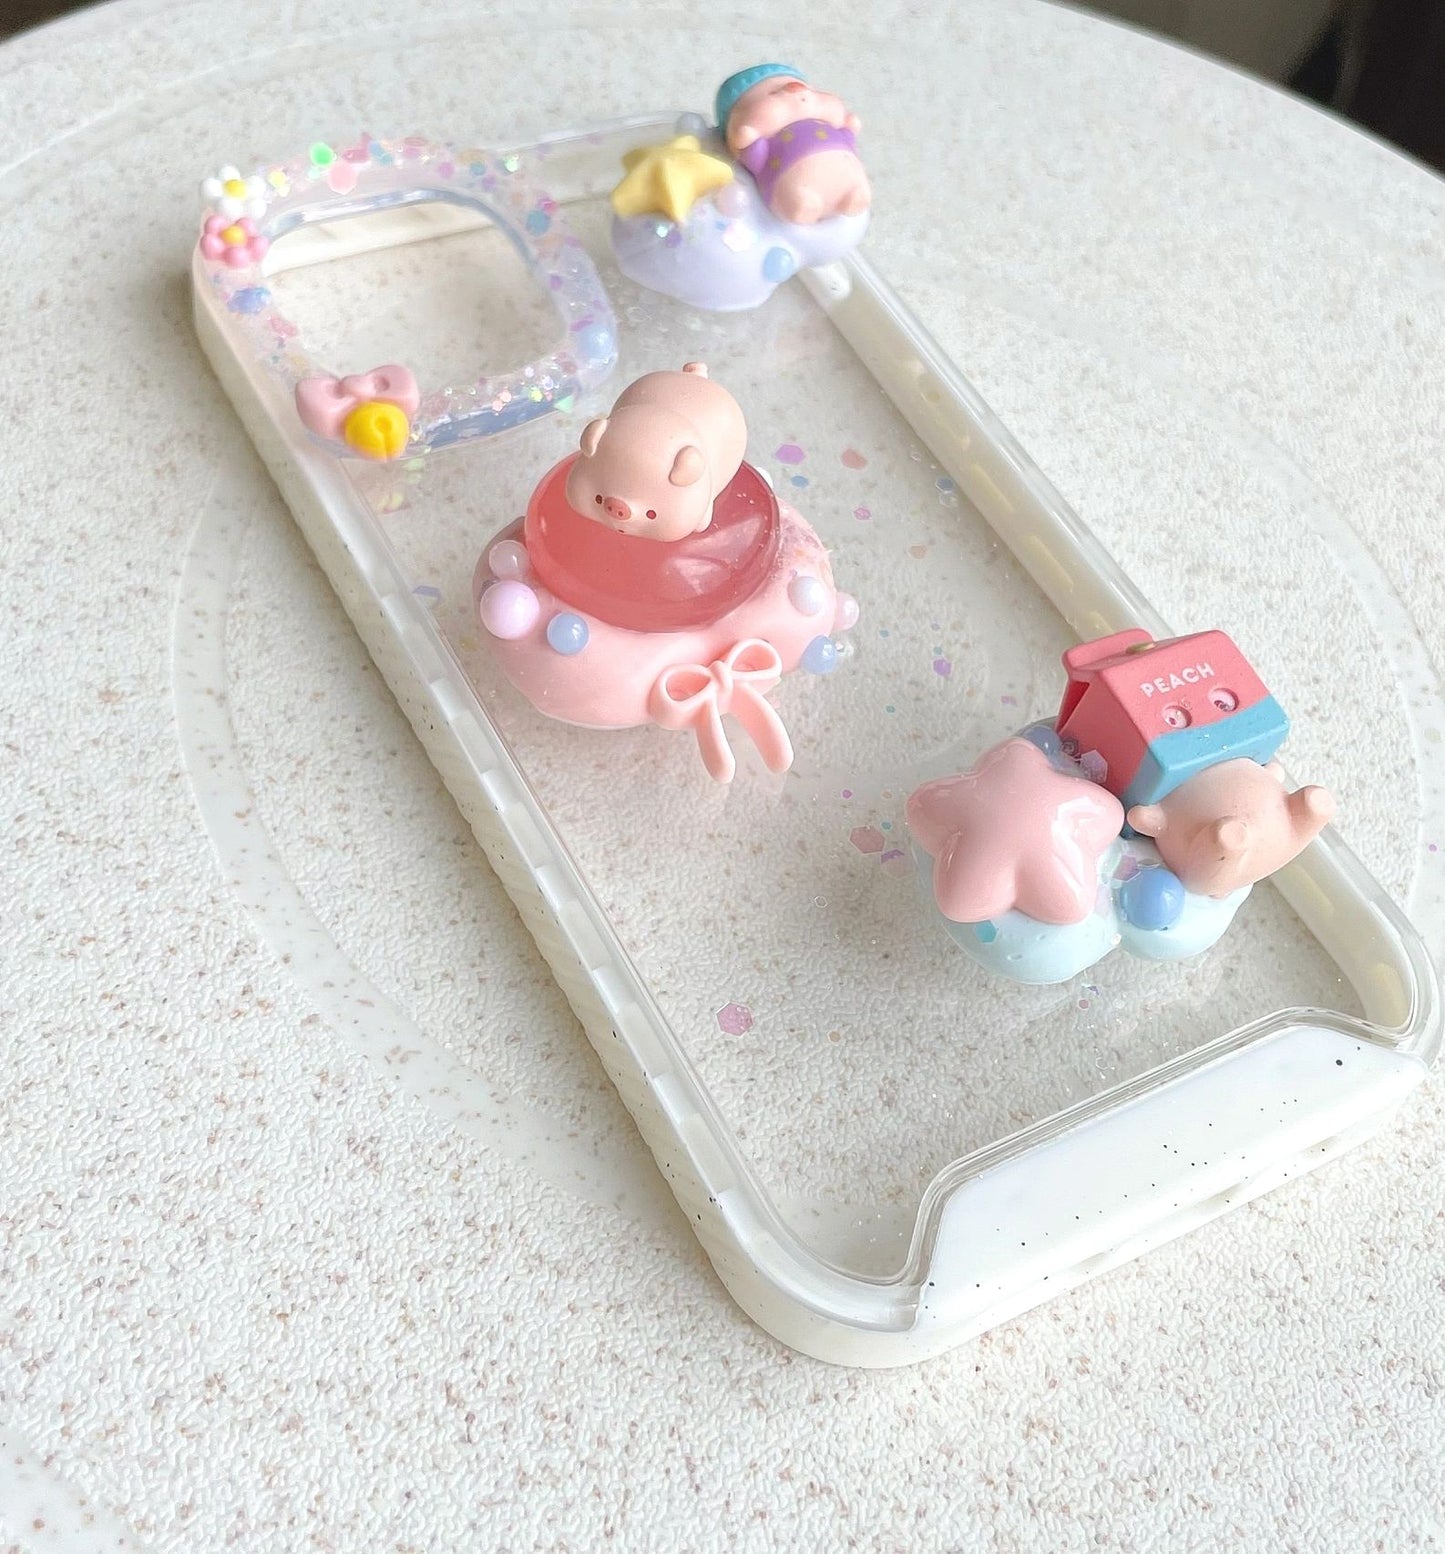 Mini Piggy Custom Decoden phone case, whipped cream phone case, cute decor DIY cases, custommade gifts, phone accessories